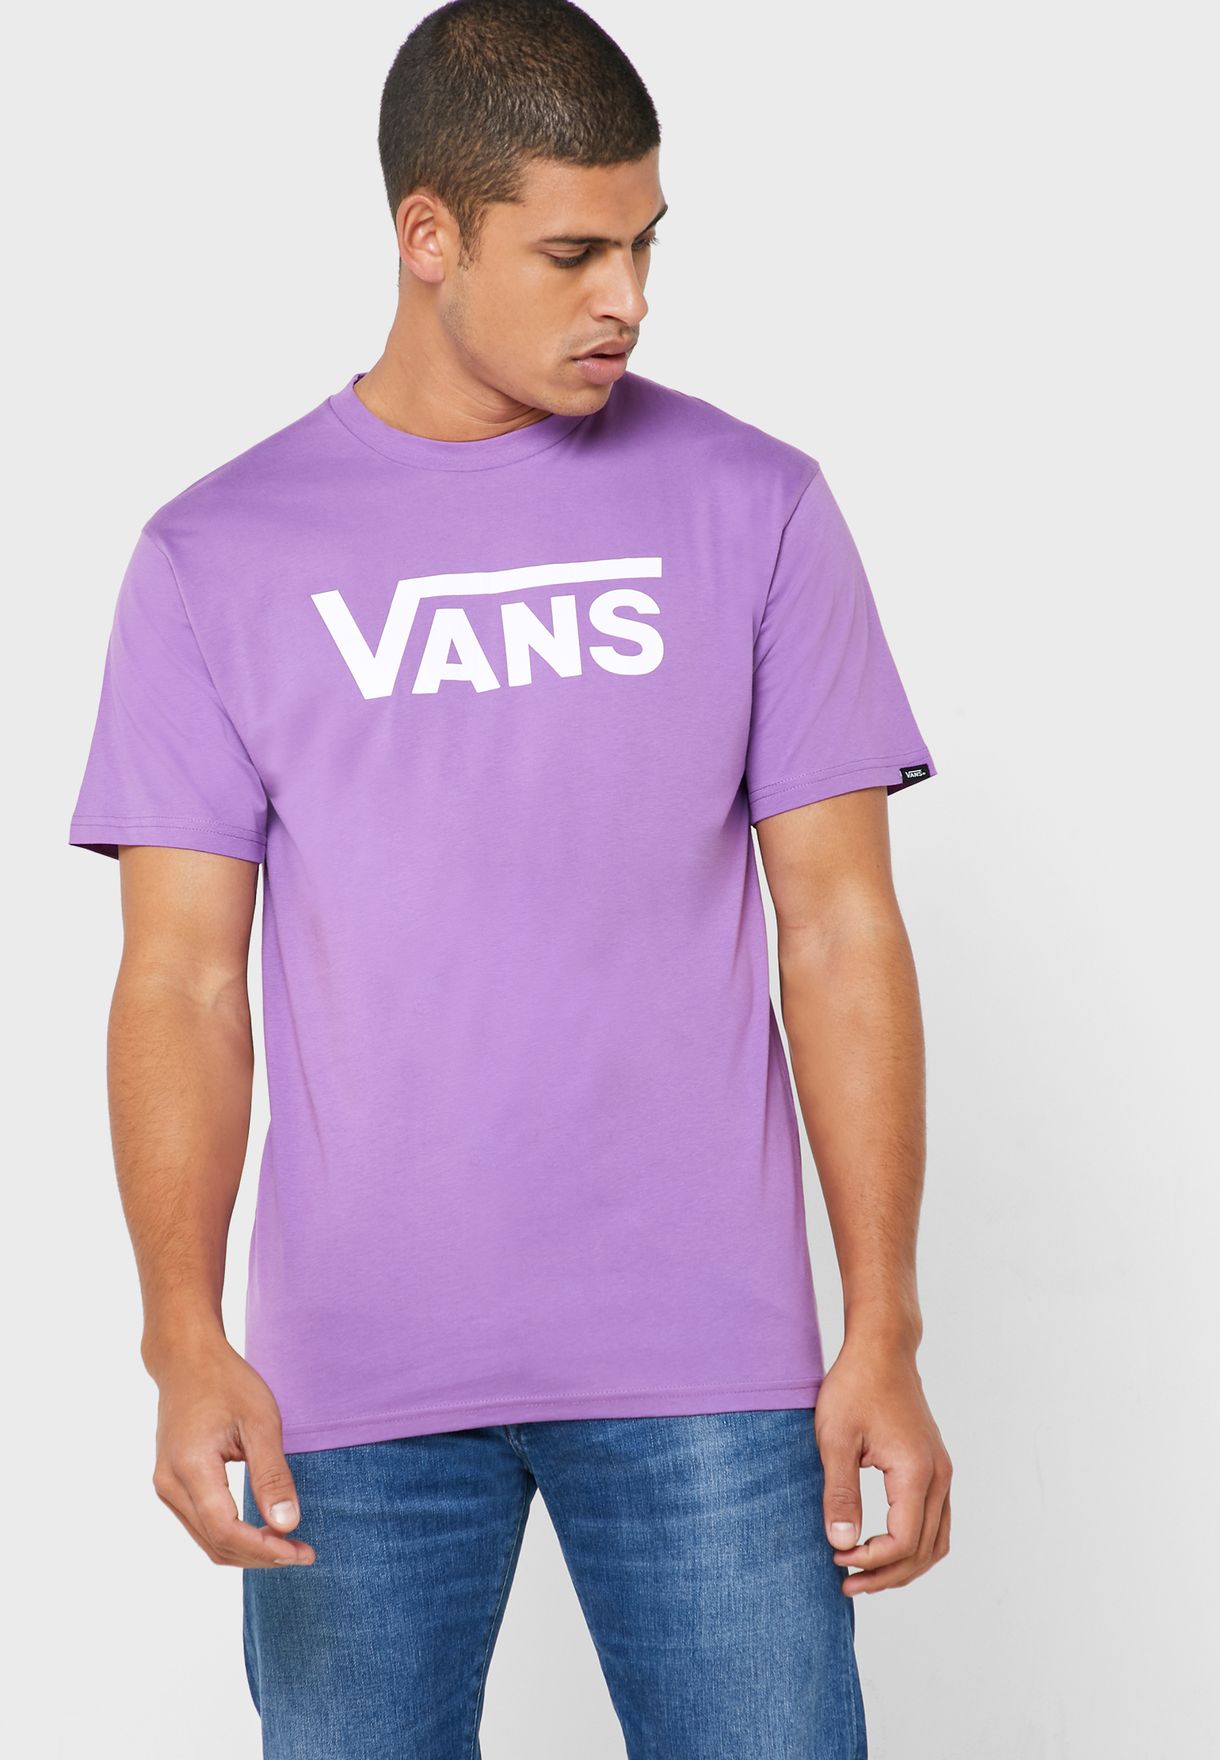 vans purple t shirt